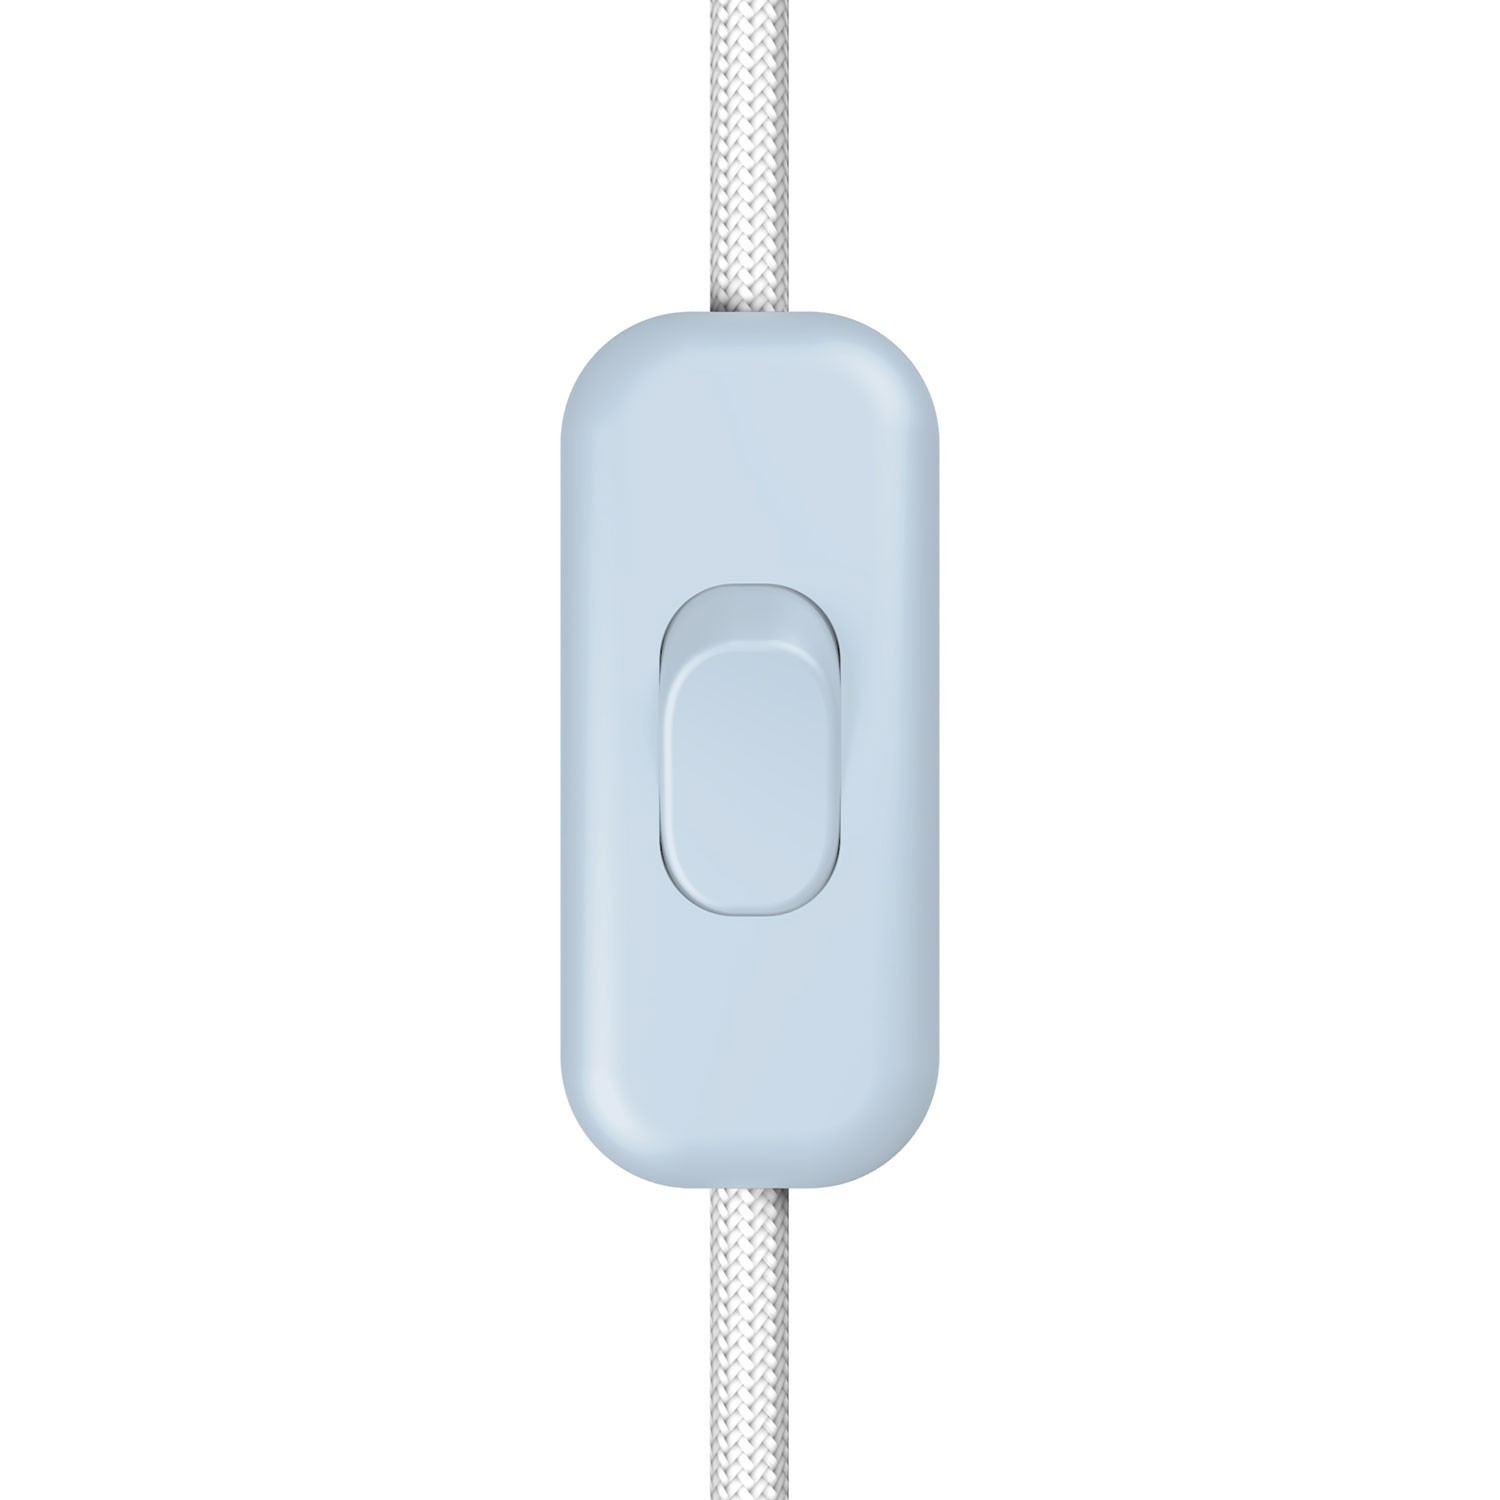 Inline single-pole switch Creative Switch soft blue